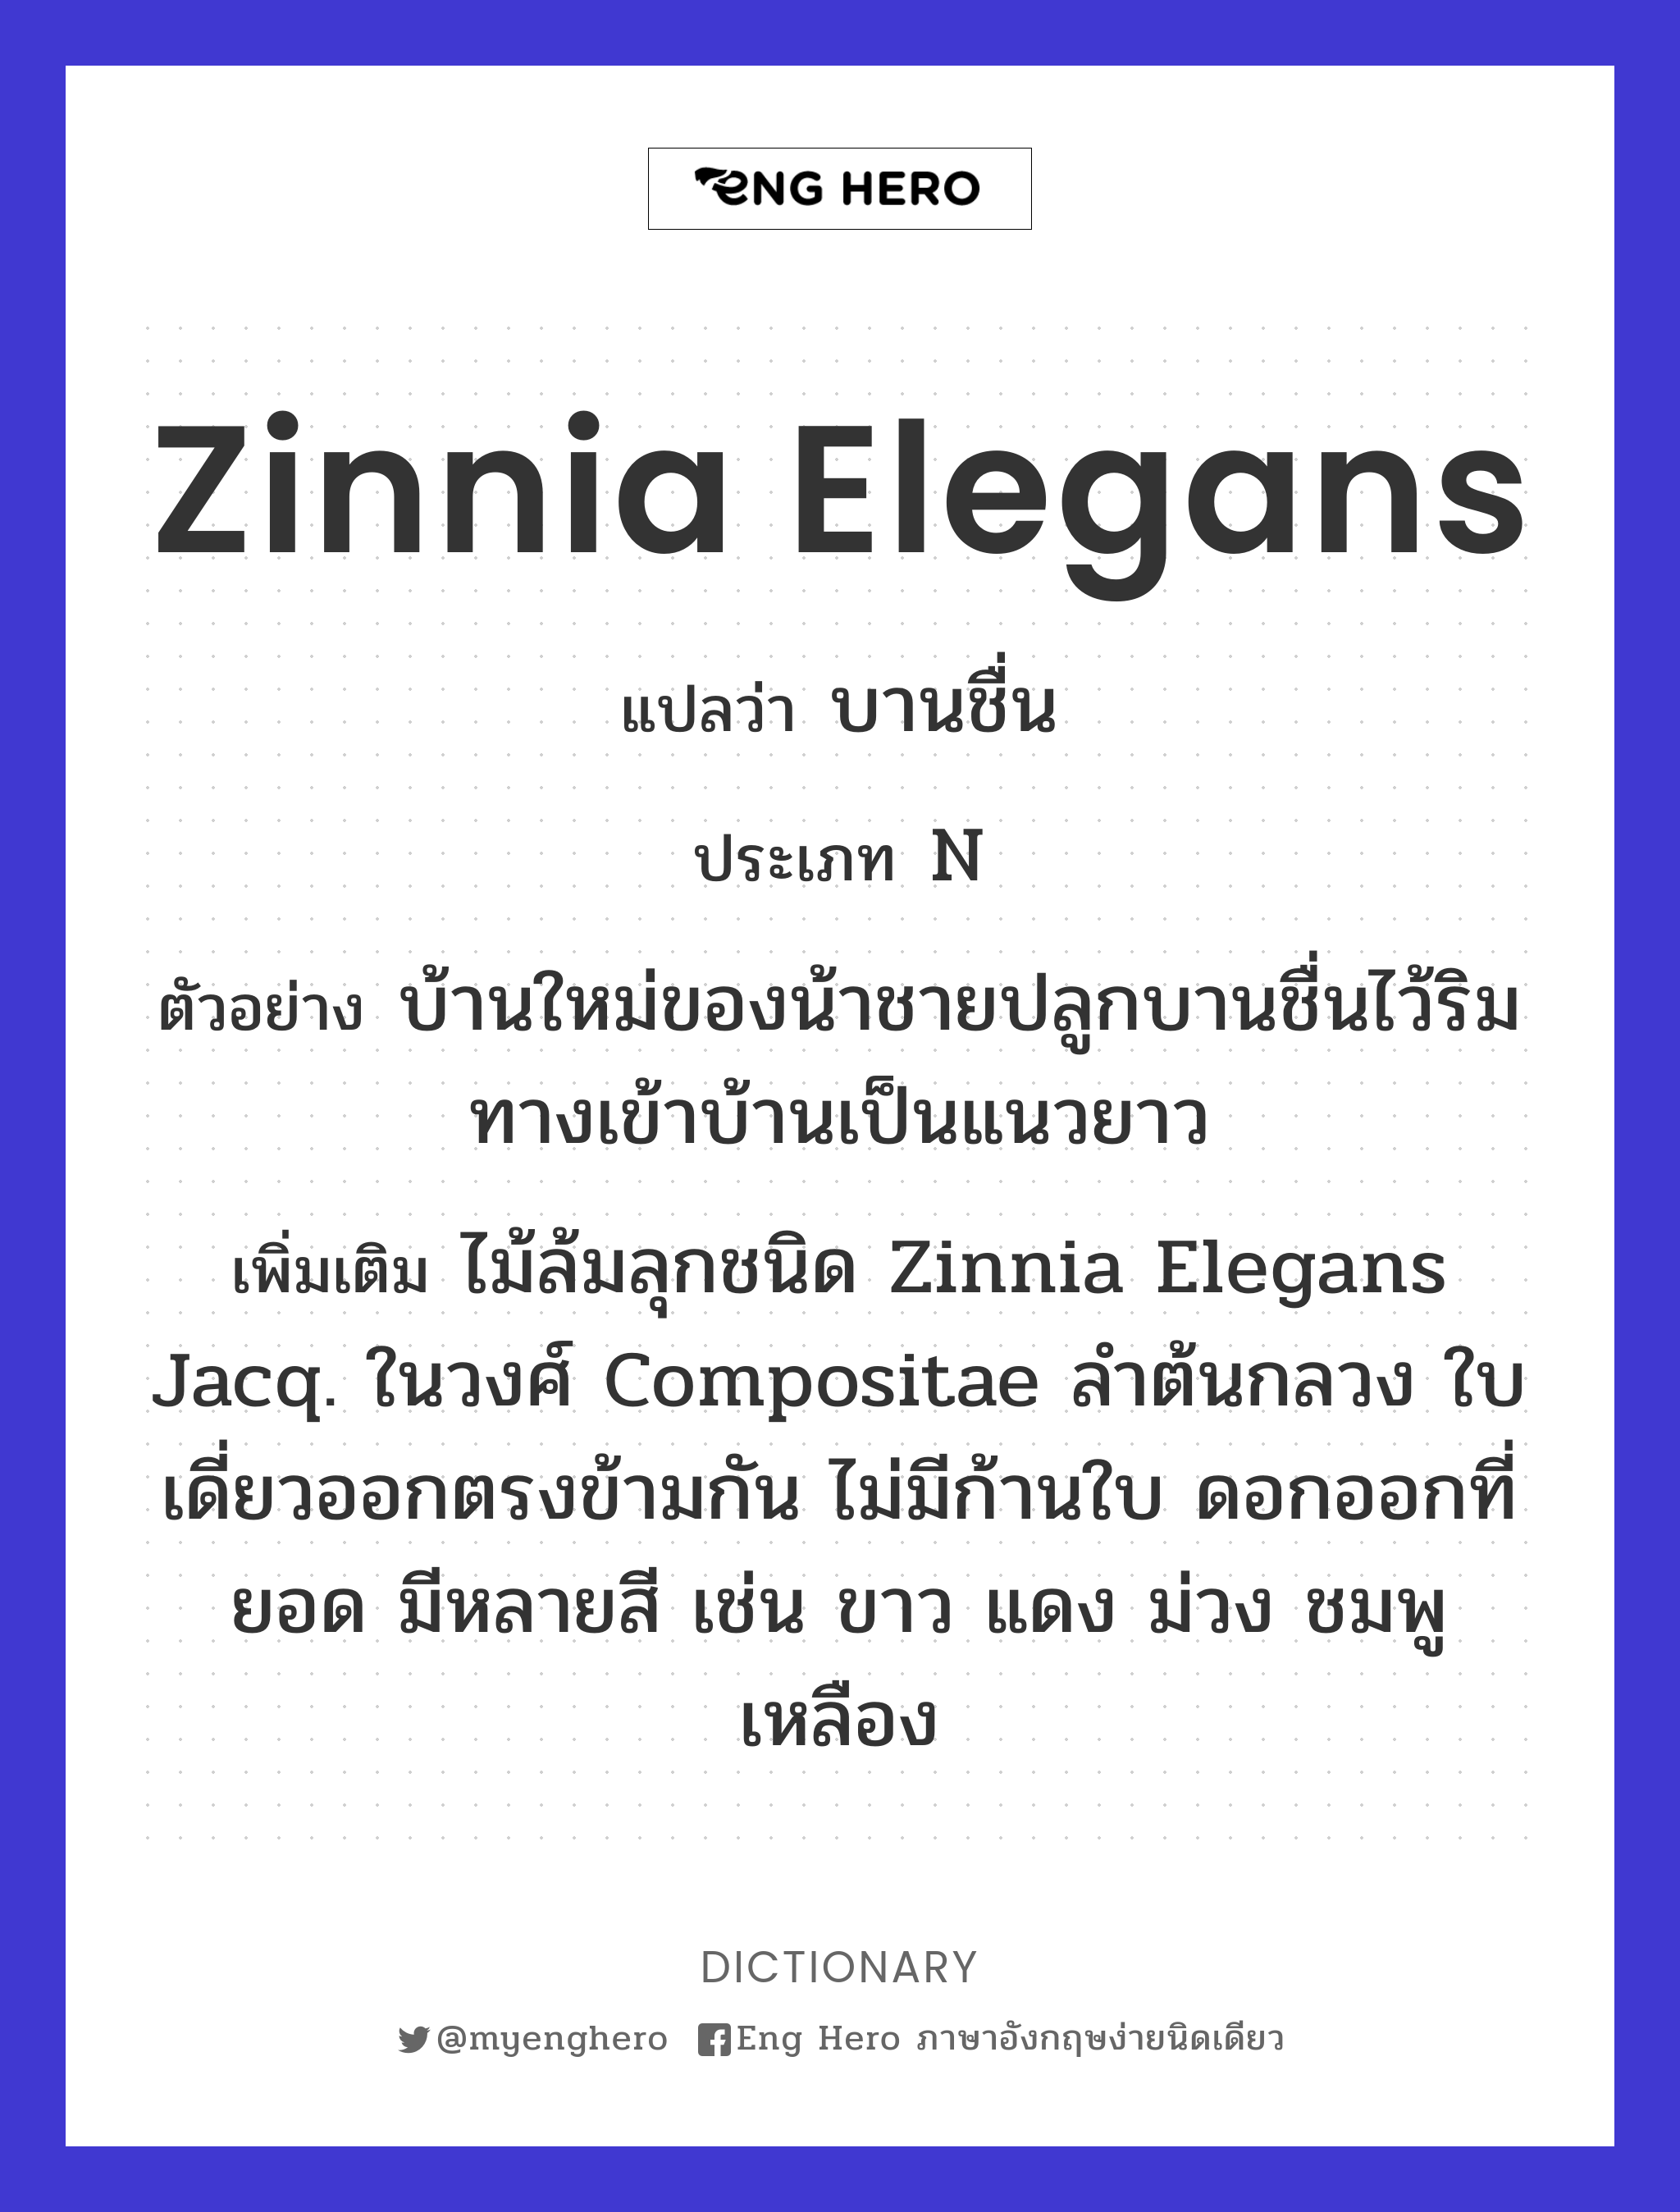 Zinnia elegans